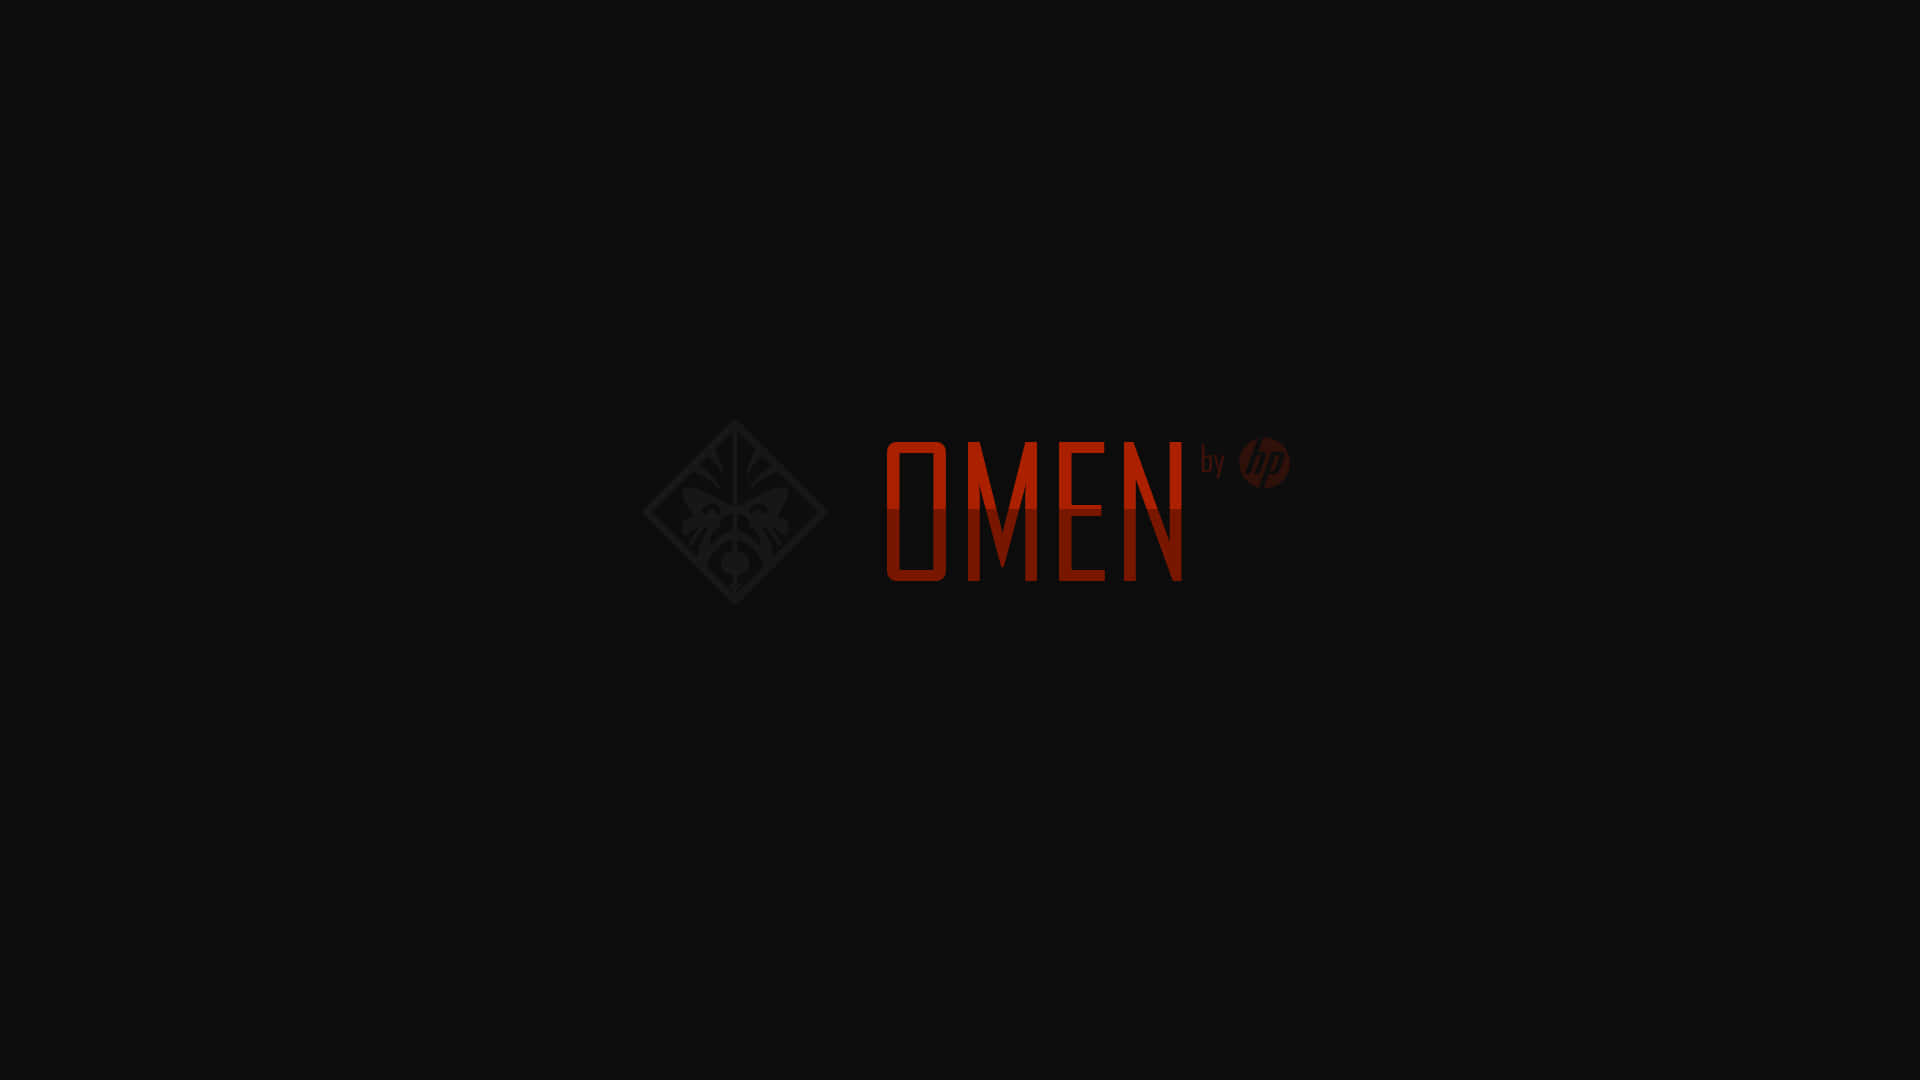 Omen Logo On A Black Background Wallpaper